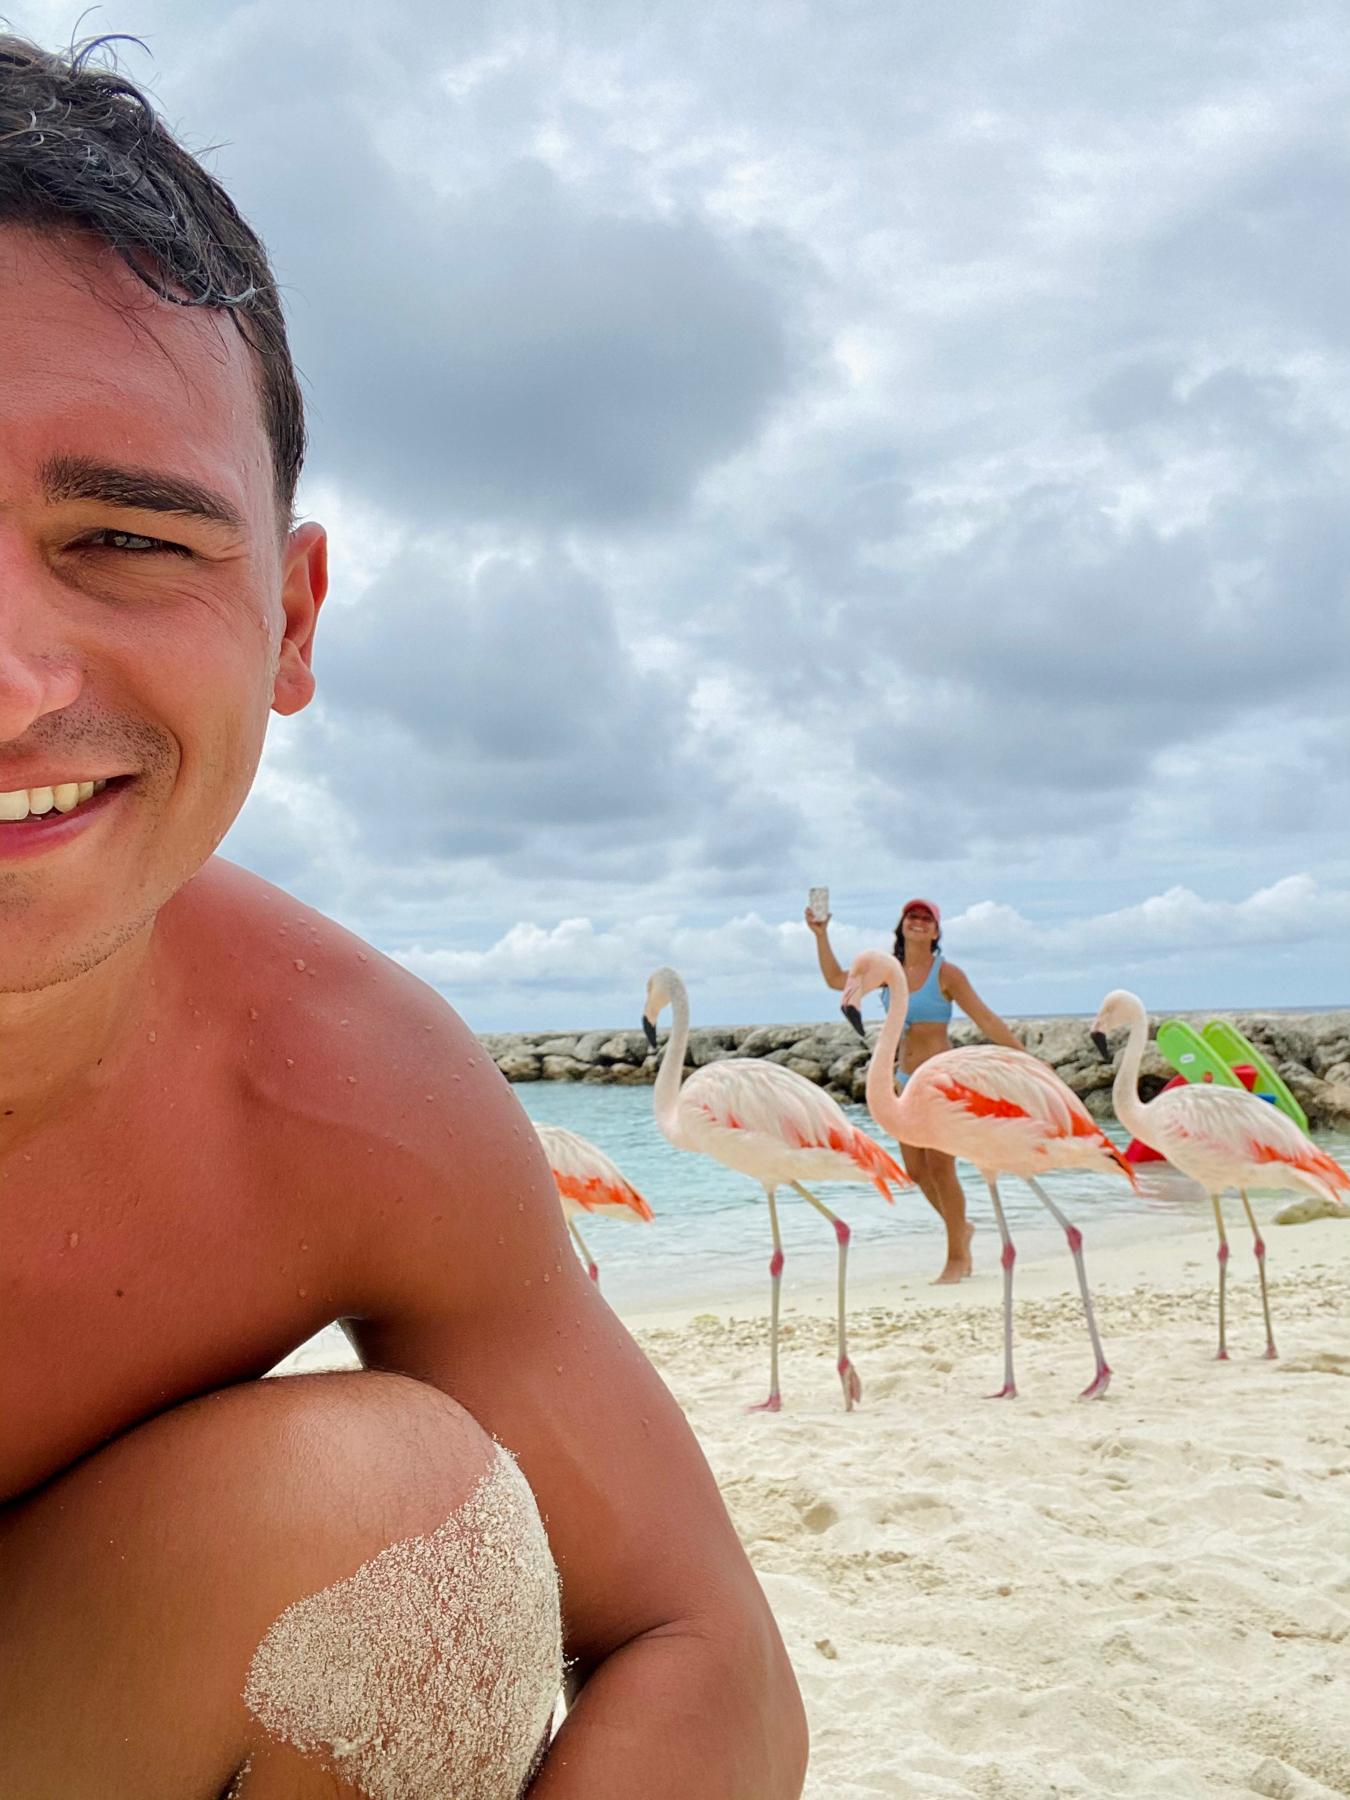 Playing with flamingos in Aruba